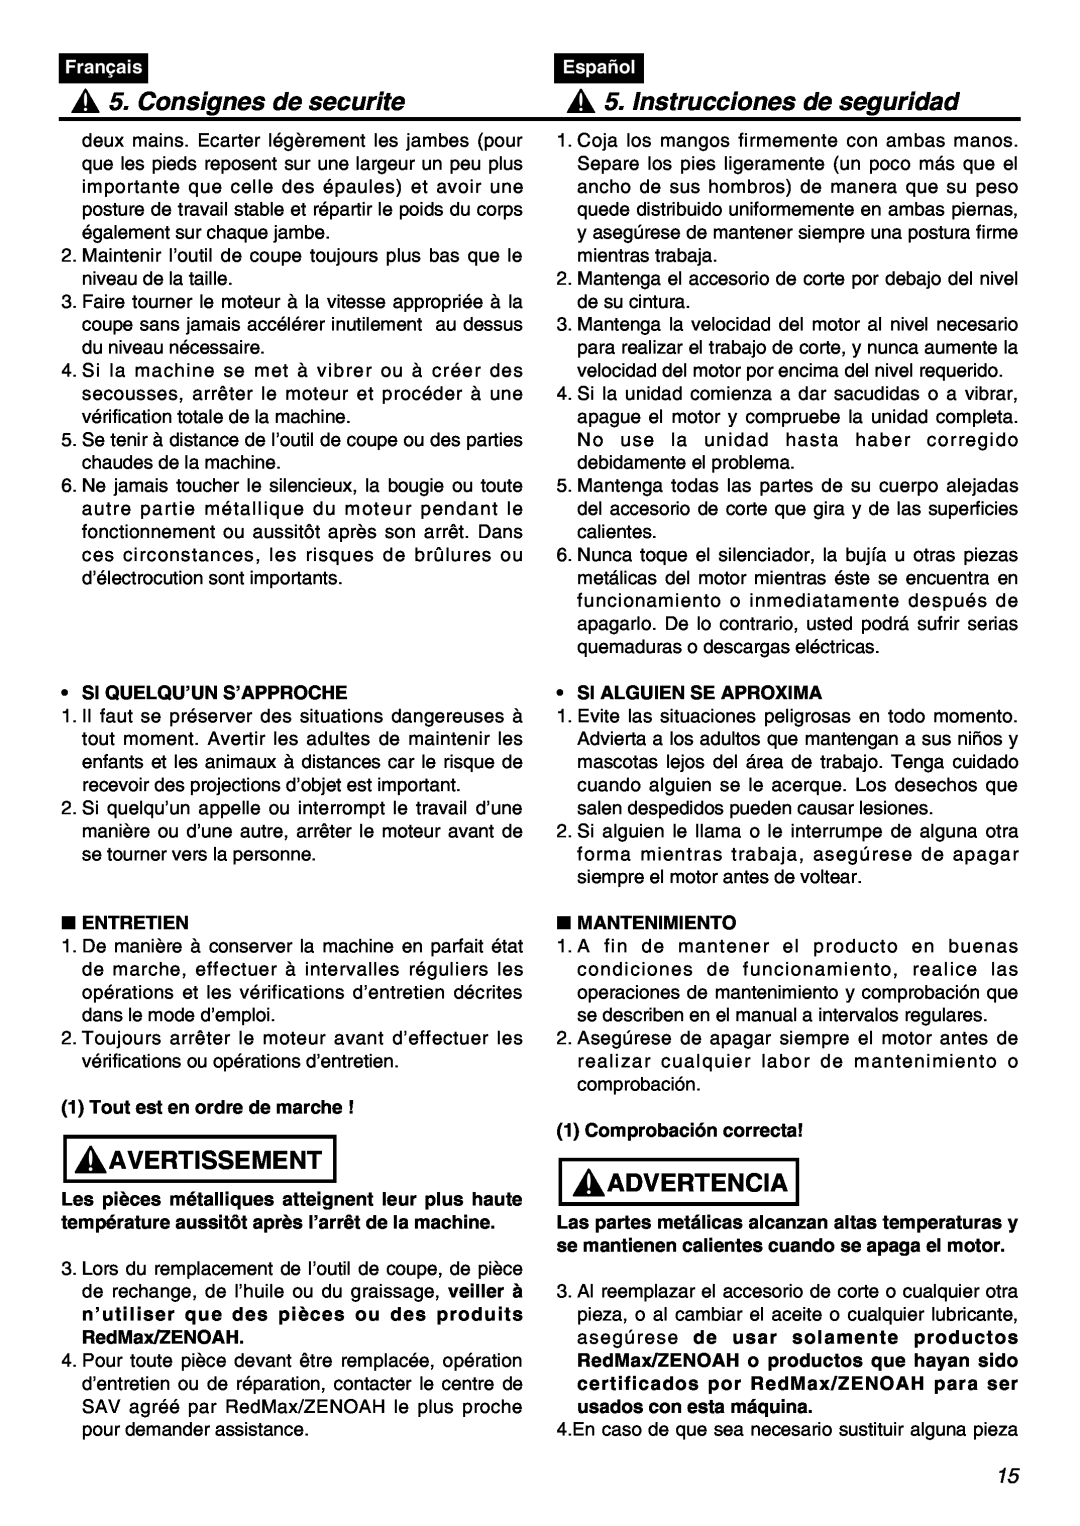 Zenoah BT250 manual Consignes de securite, Instrucciones de seguridad, Avertissement, Advertencia, Français, Español 